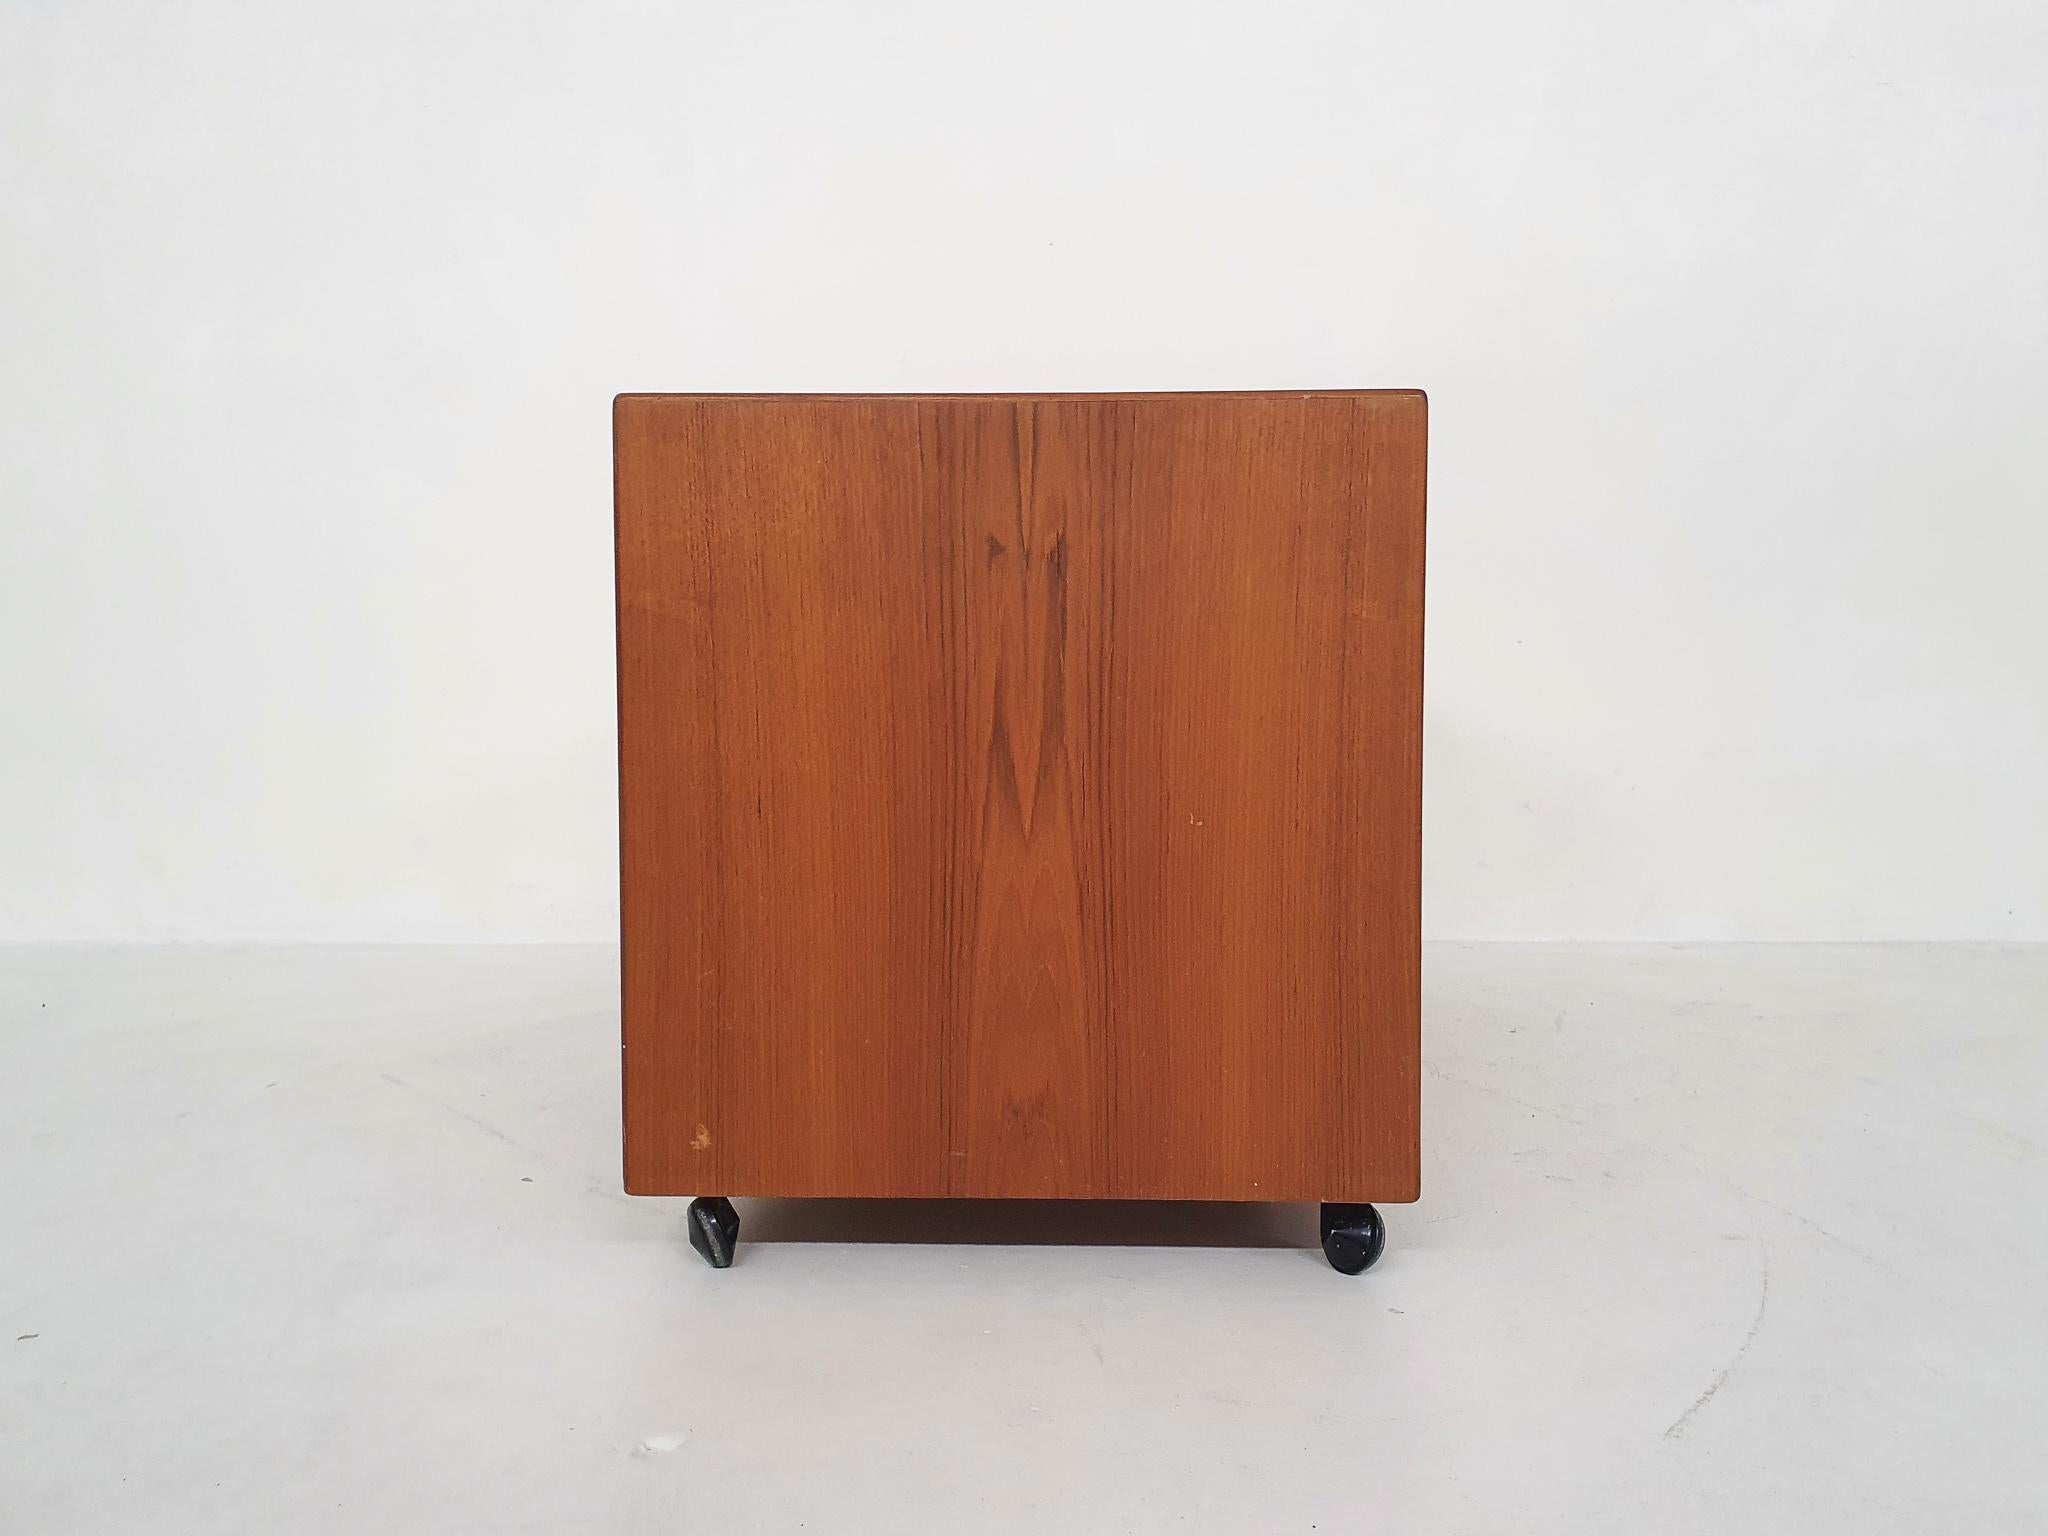 Scandinavian Modern Danish Design Teak Record Player or Audio Cabinet, Denmark 1960's For Sale